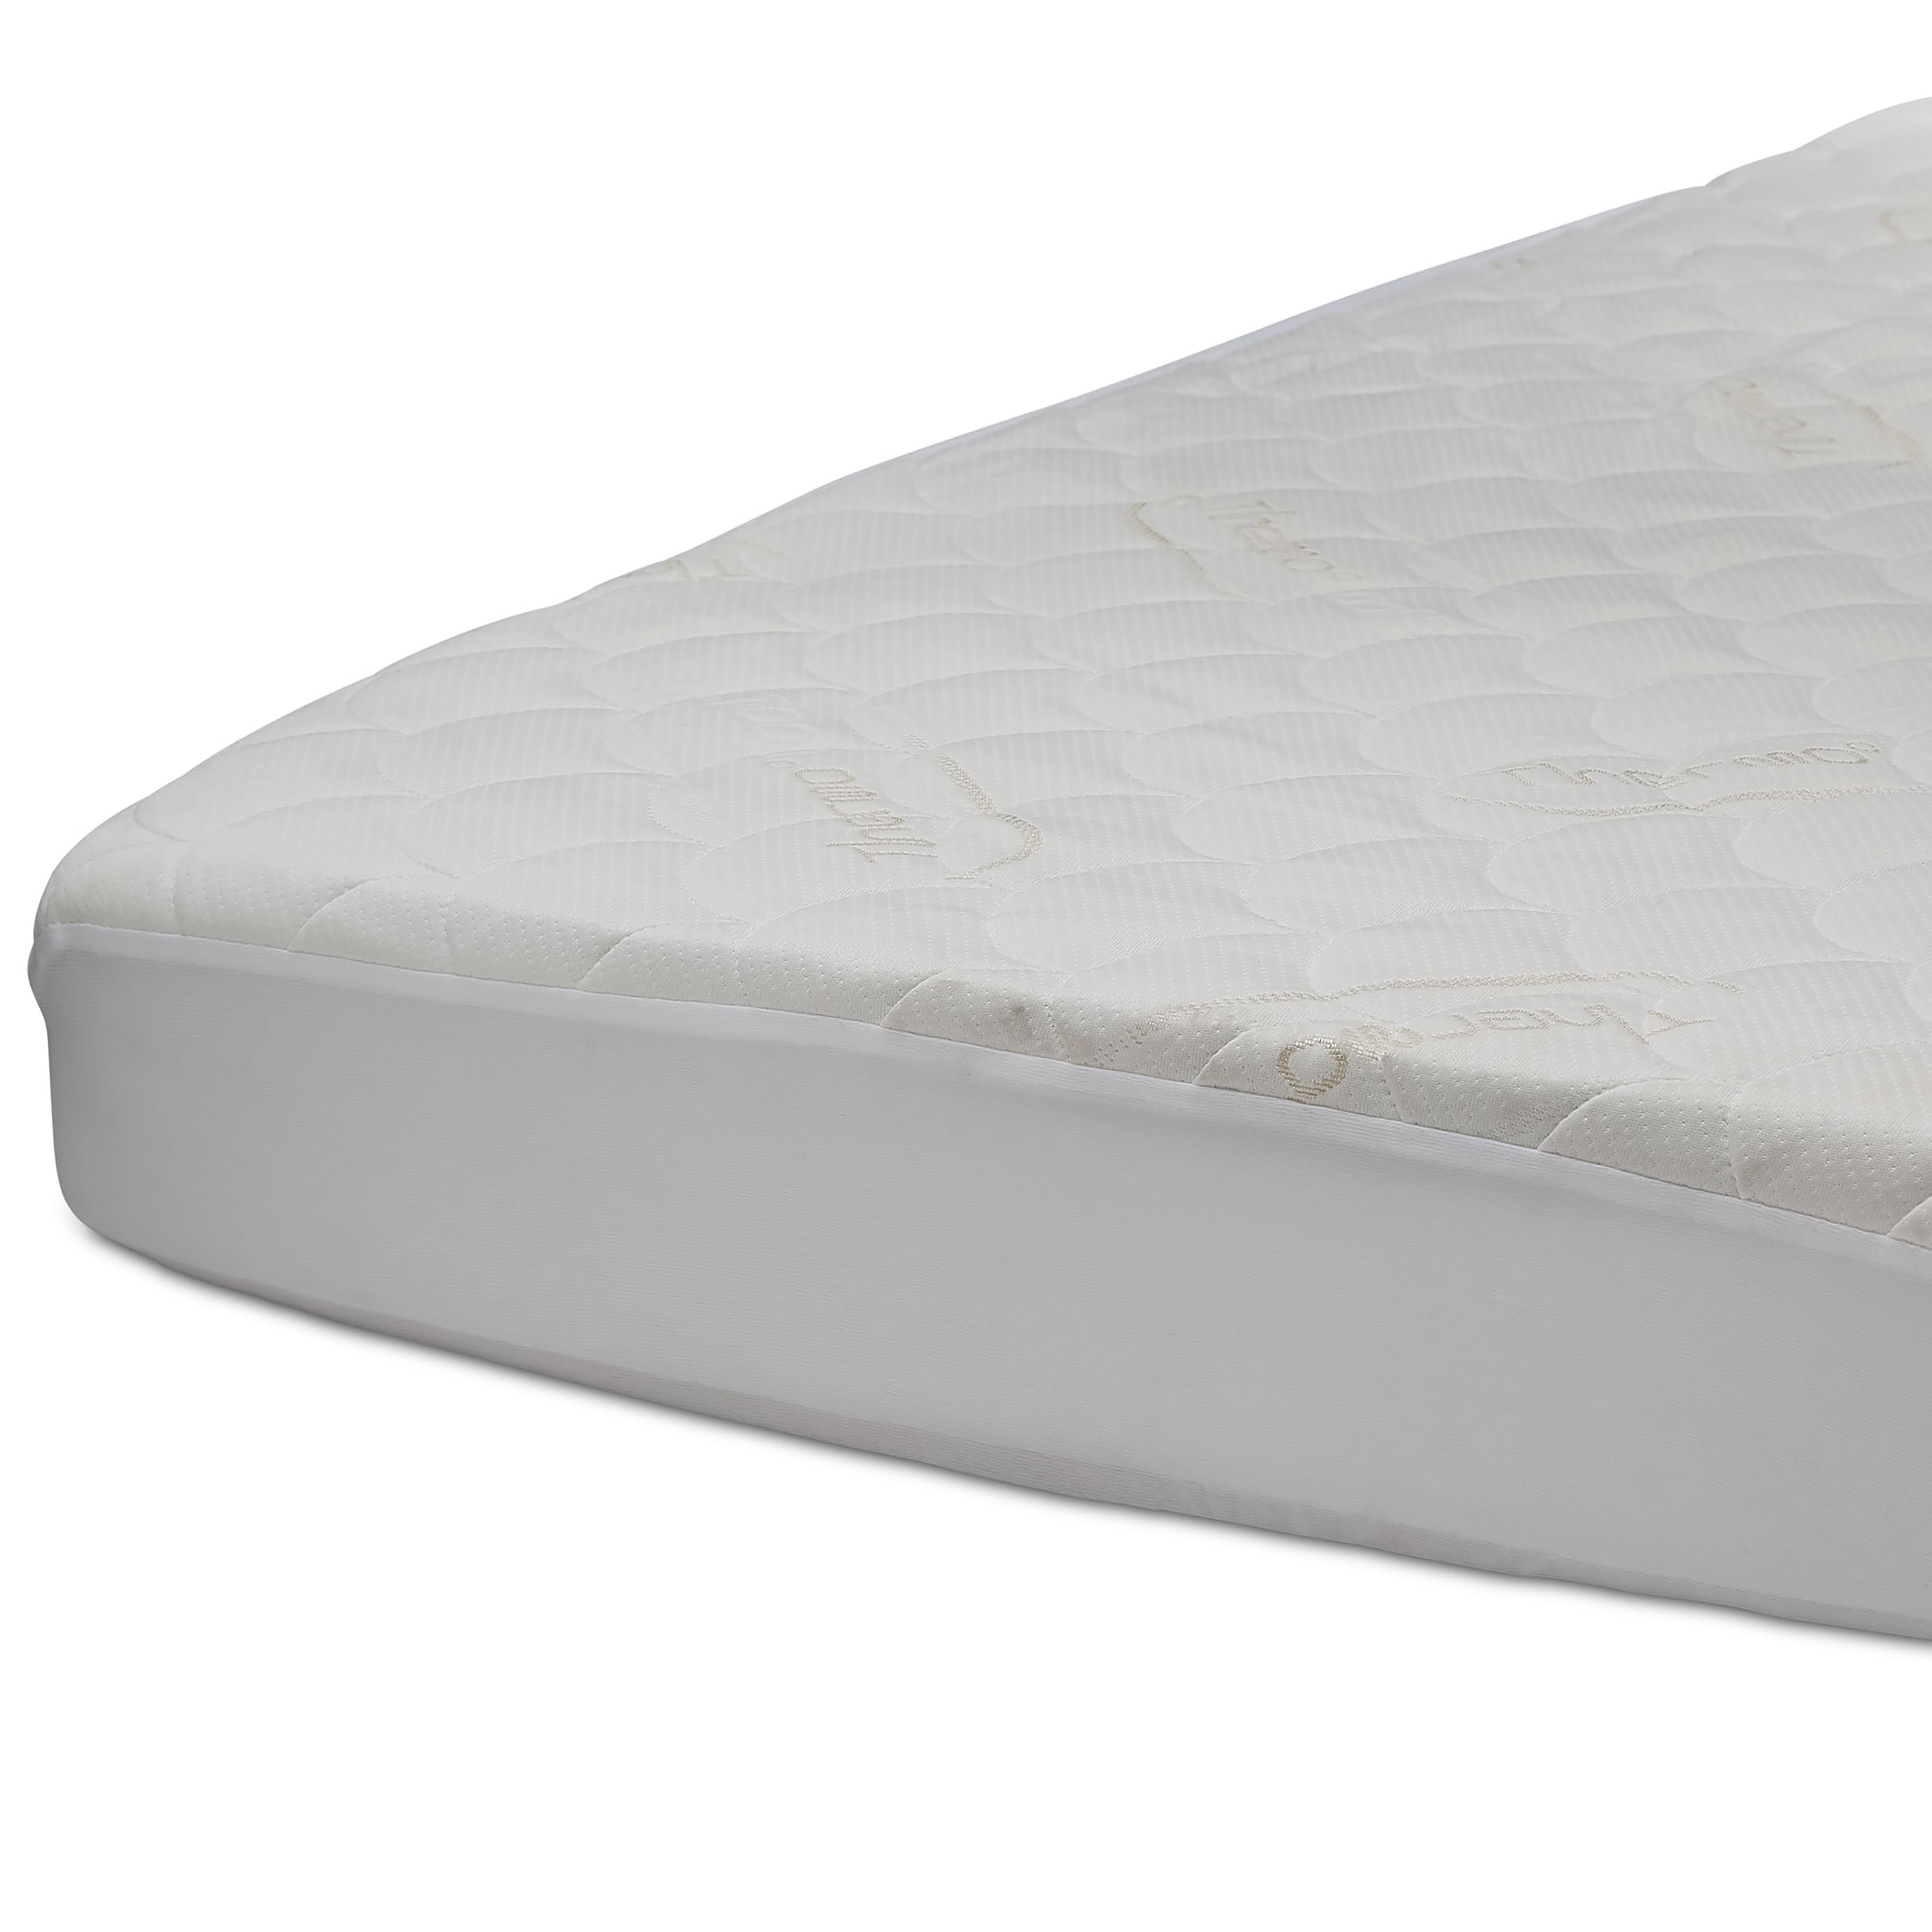 comforpedic crib mattress